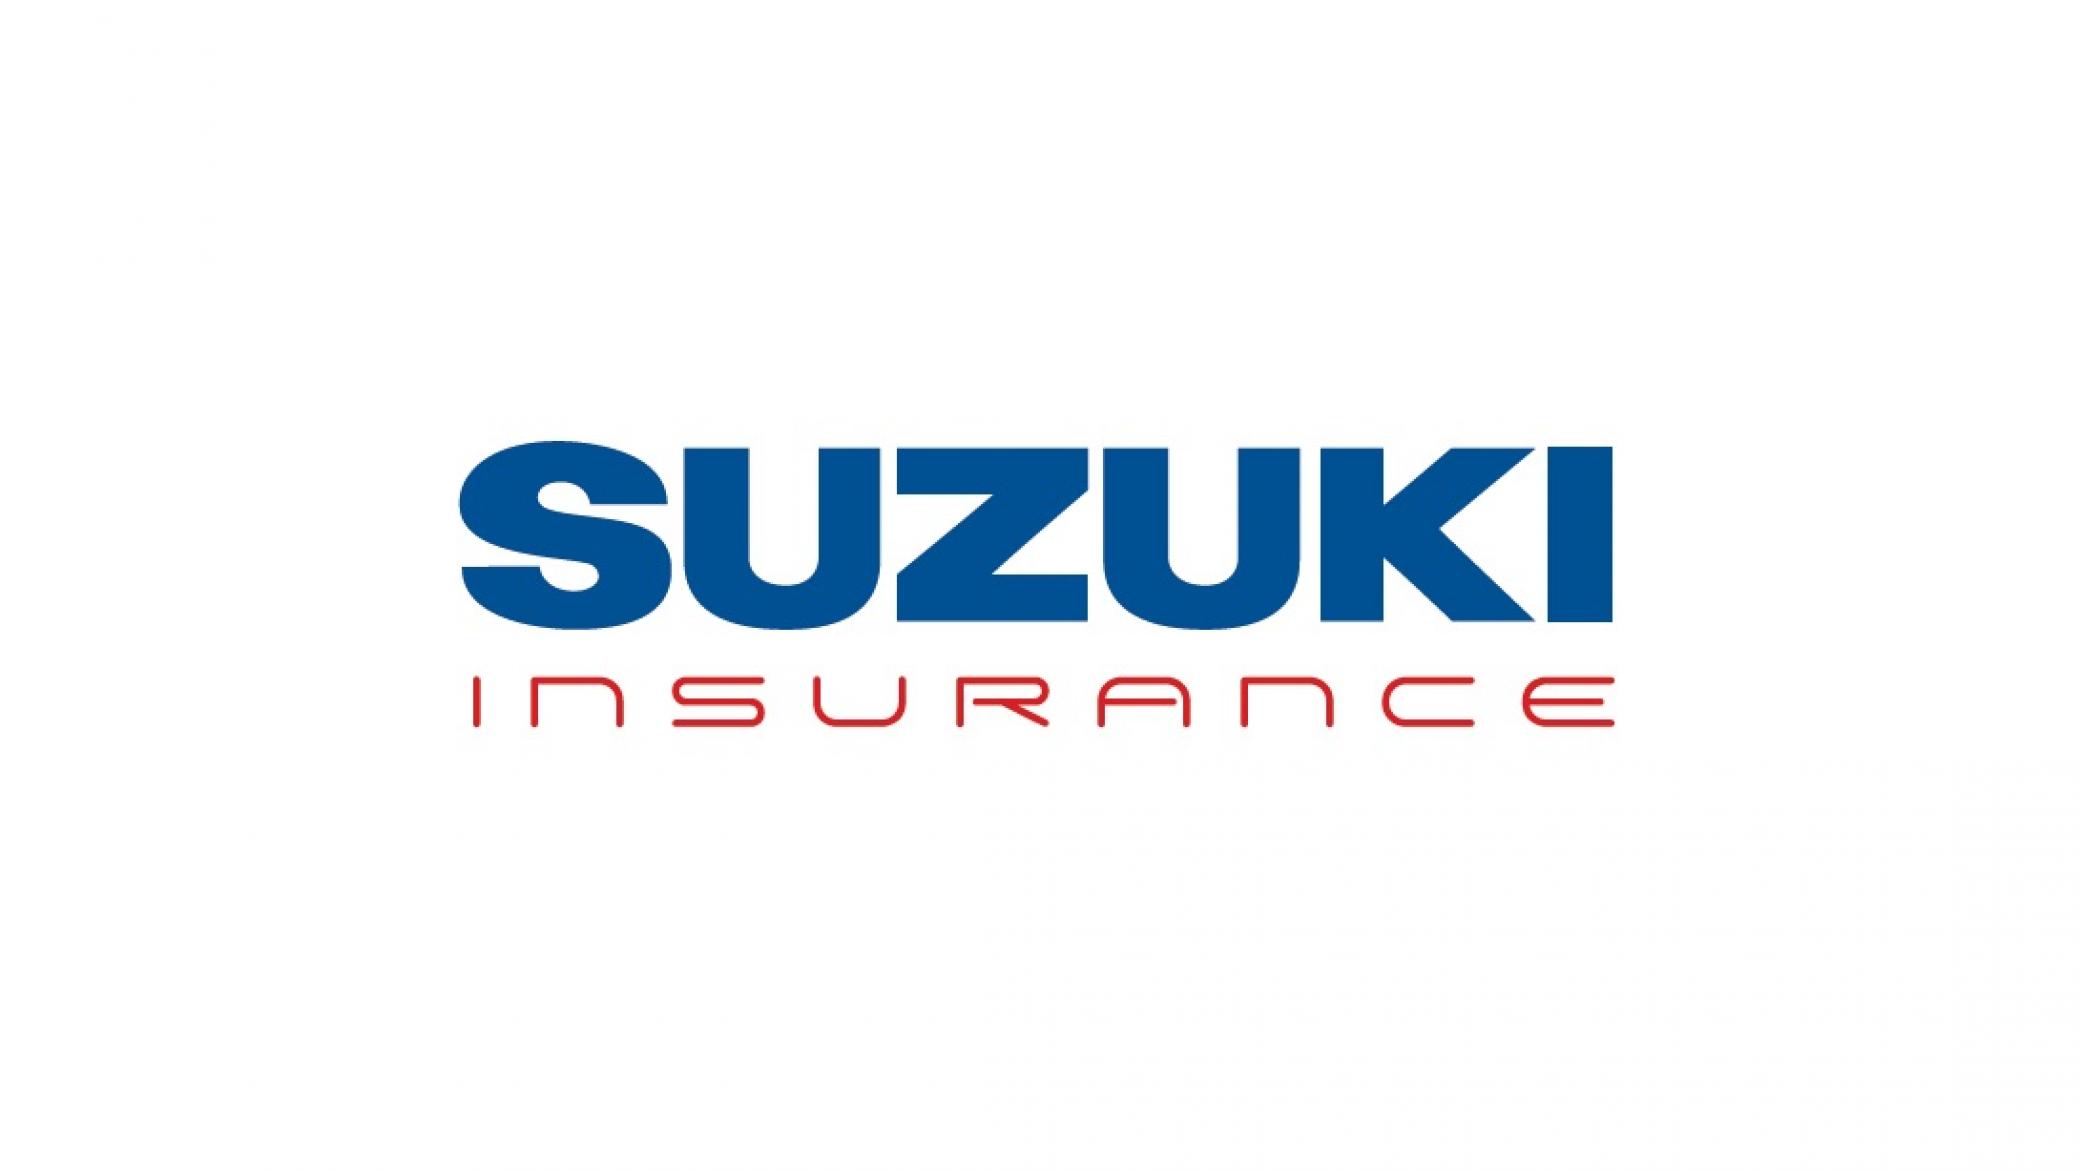 Suzuki insurance